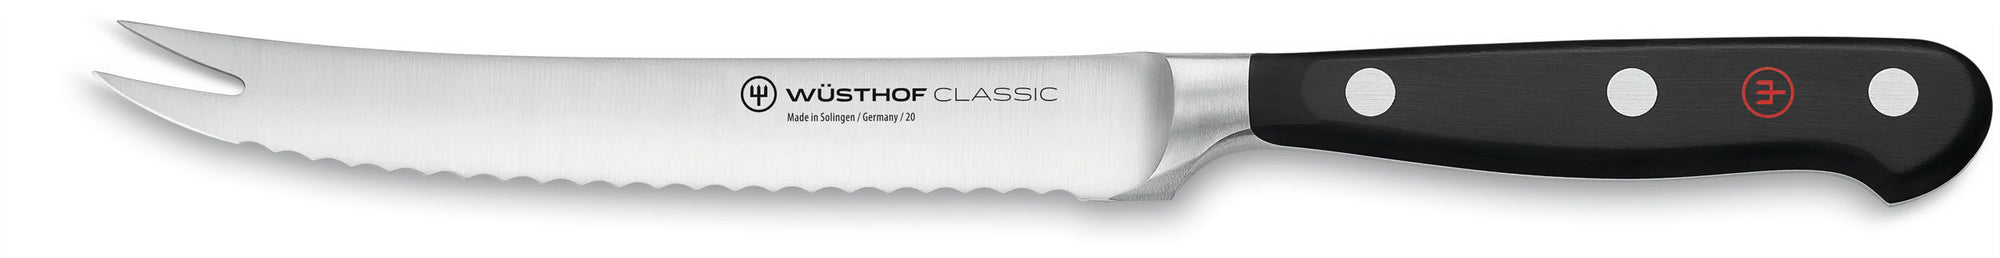 Wusthof Classic Tomato Knife, 5.5-inch (14 cm) - 4109